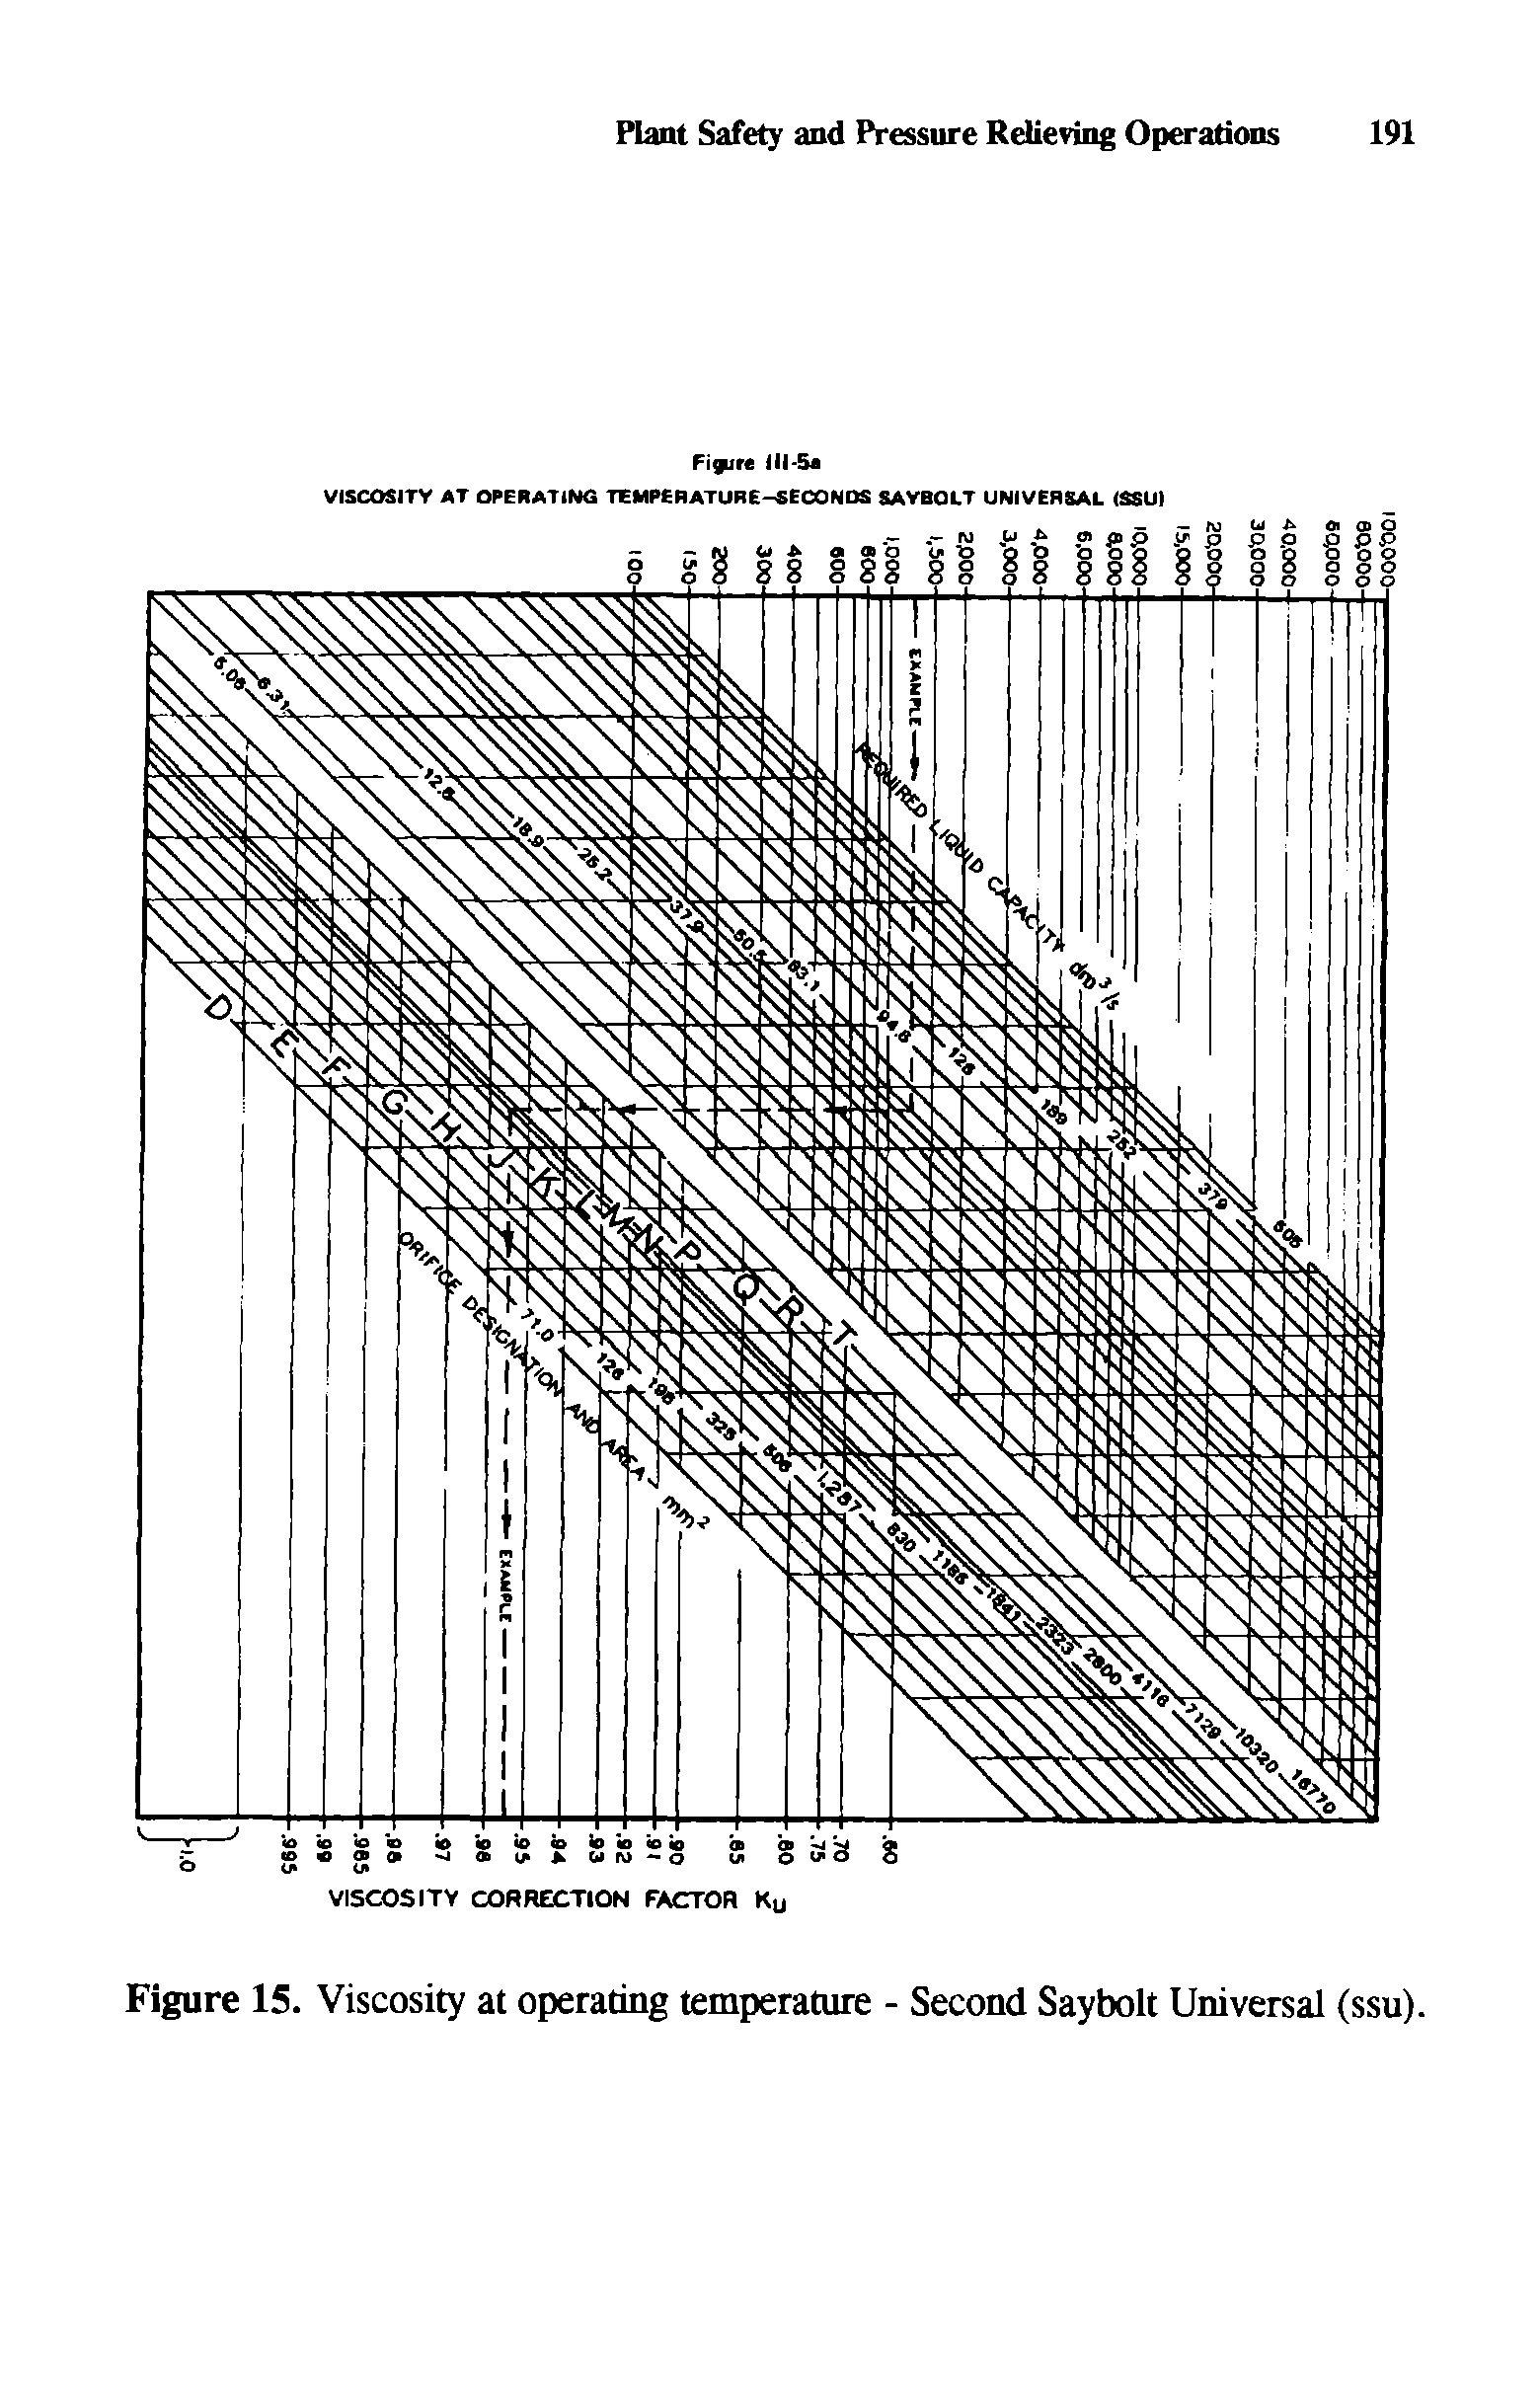 Figure 15. Viscosity at operating temperature - Second Saybolt Universal (ssu).